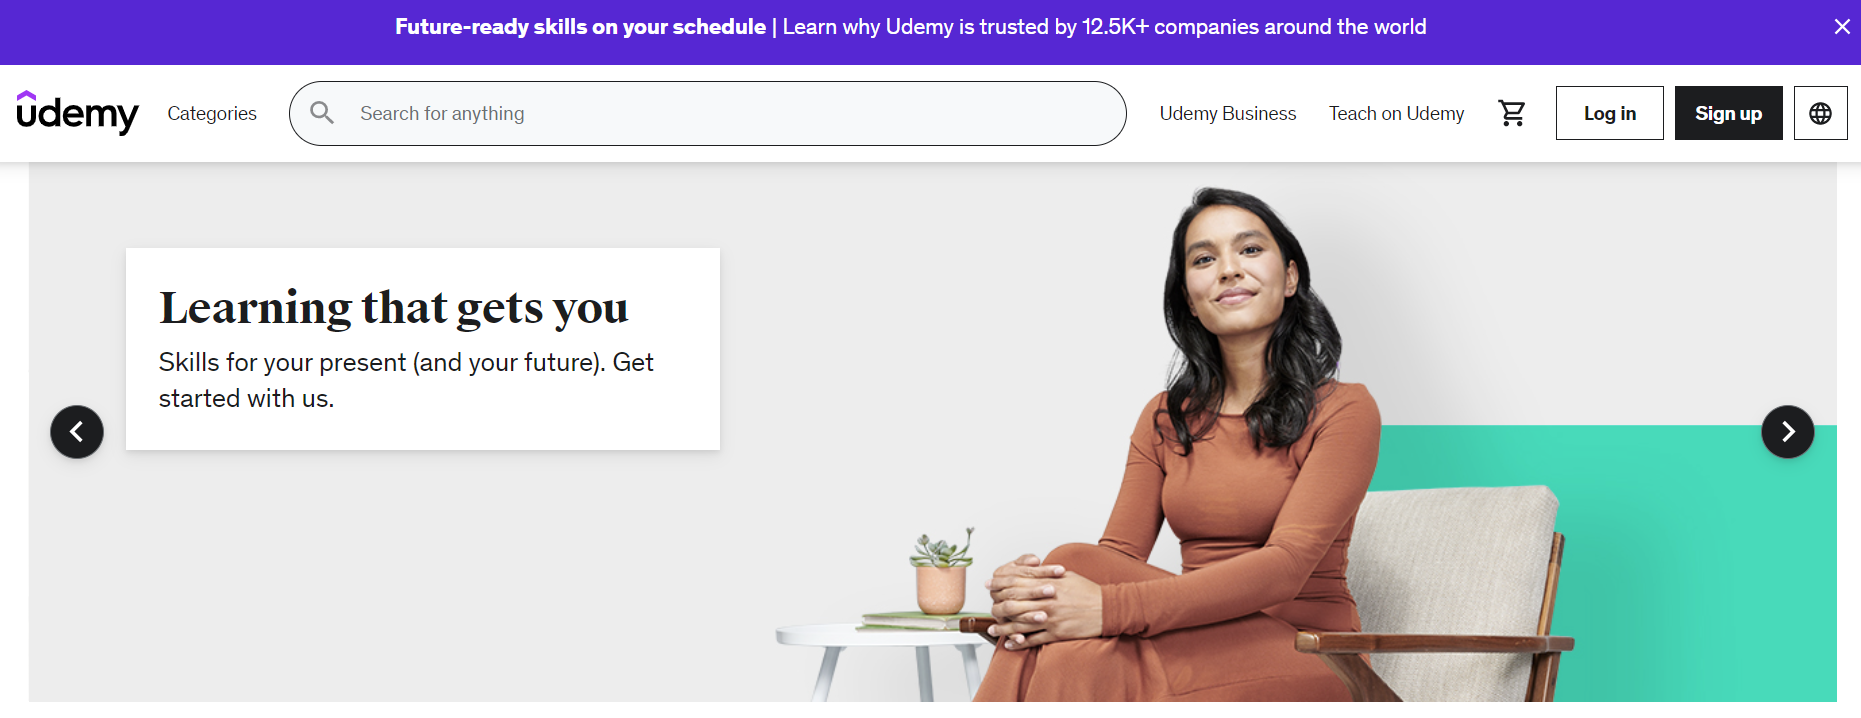 Udemy Business Model - homepage screenshot